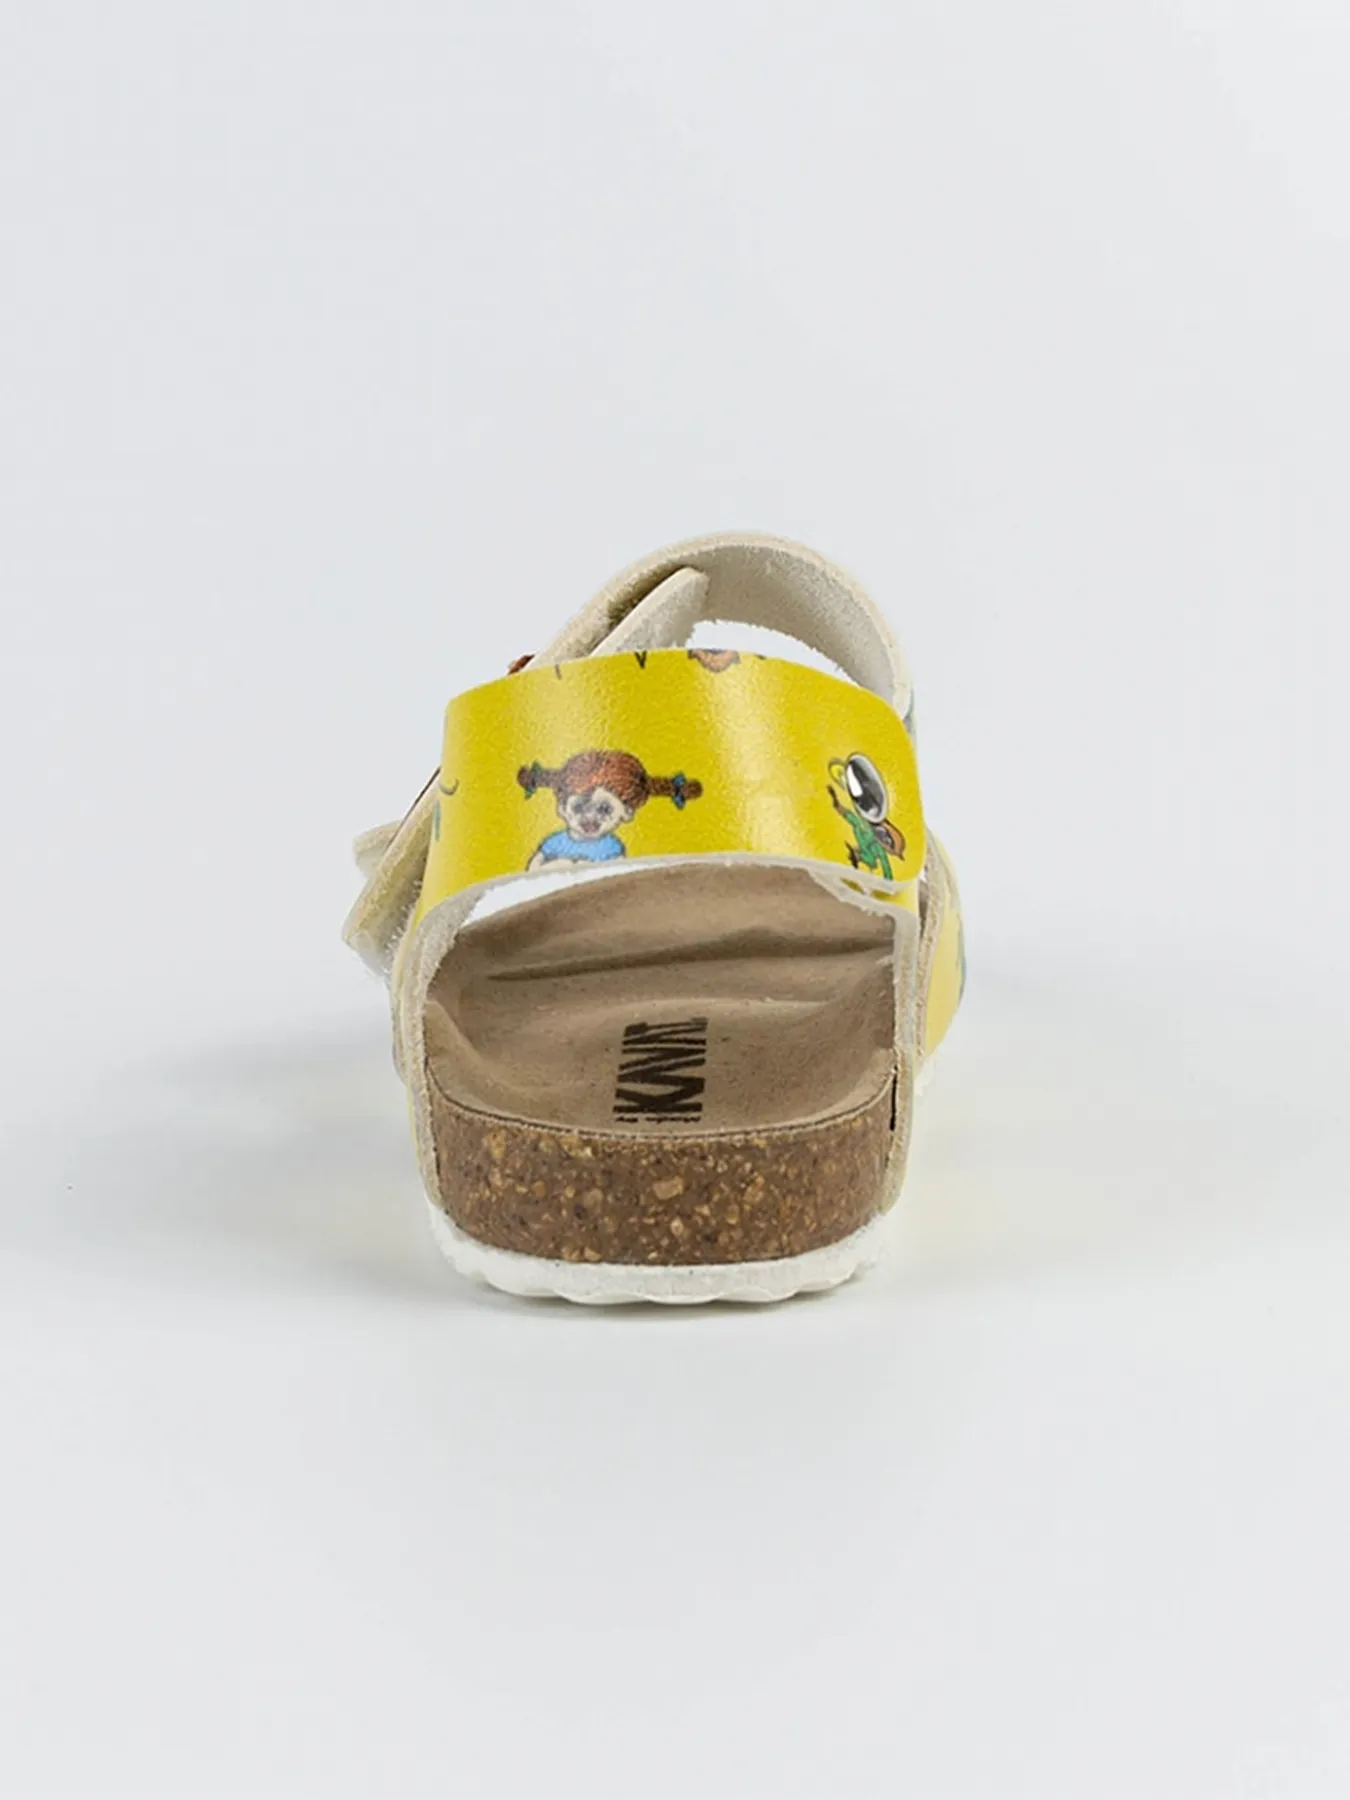 Sandals Pippi Longstocking - Yellow